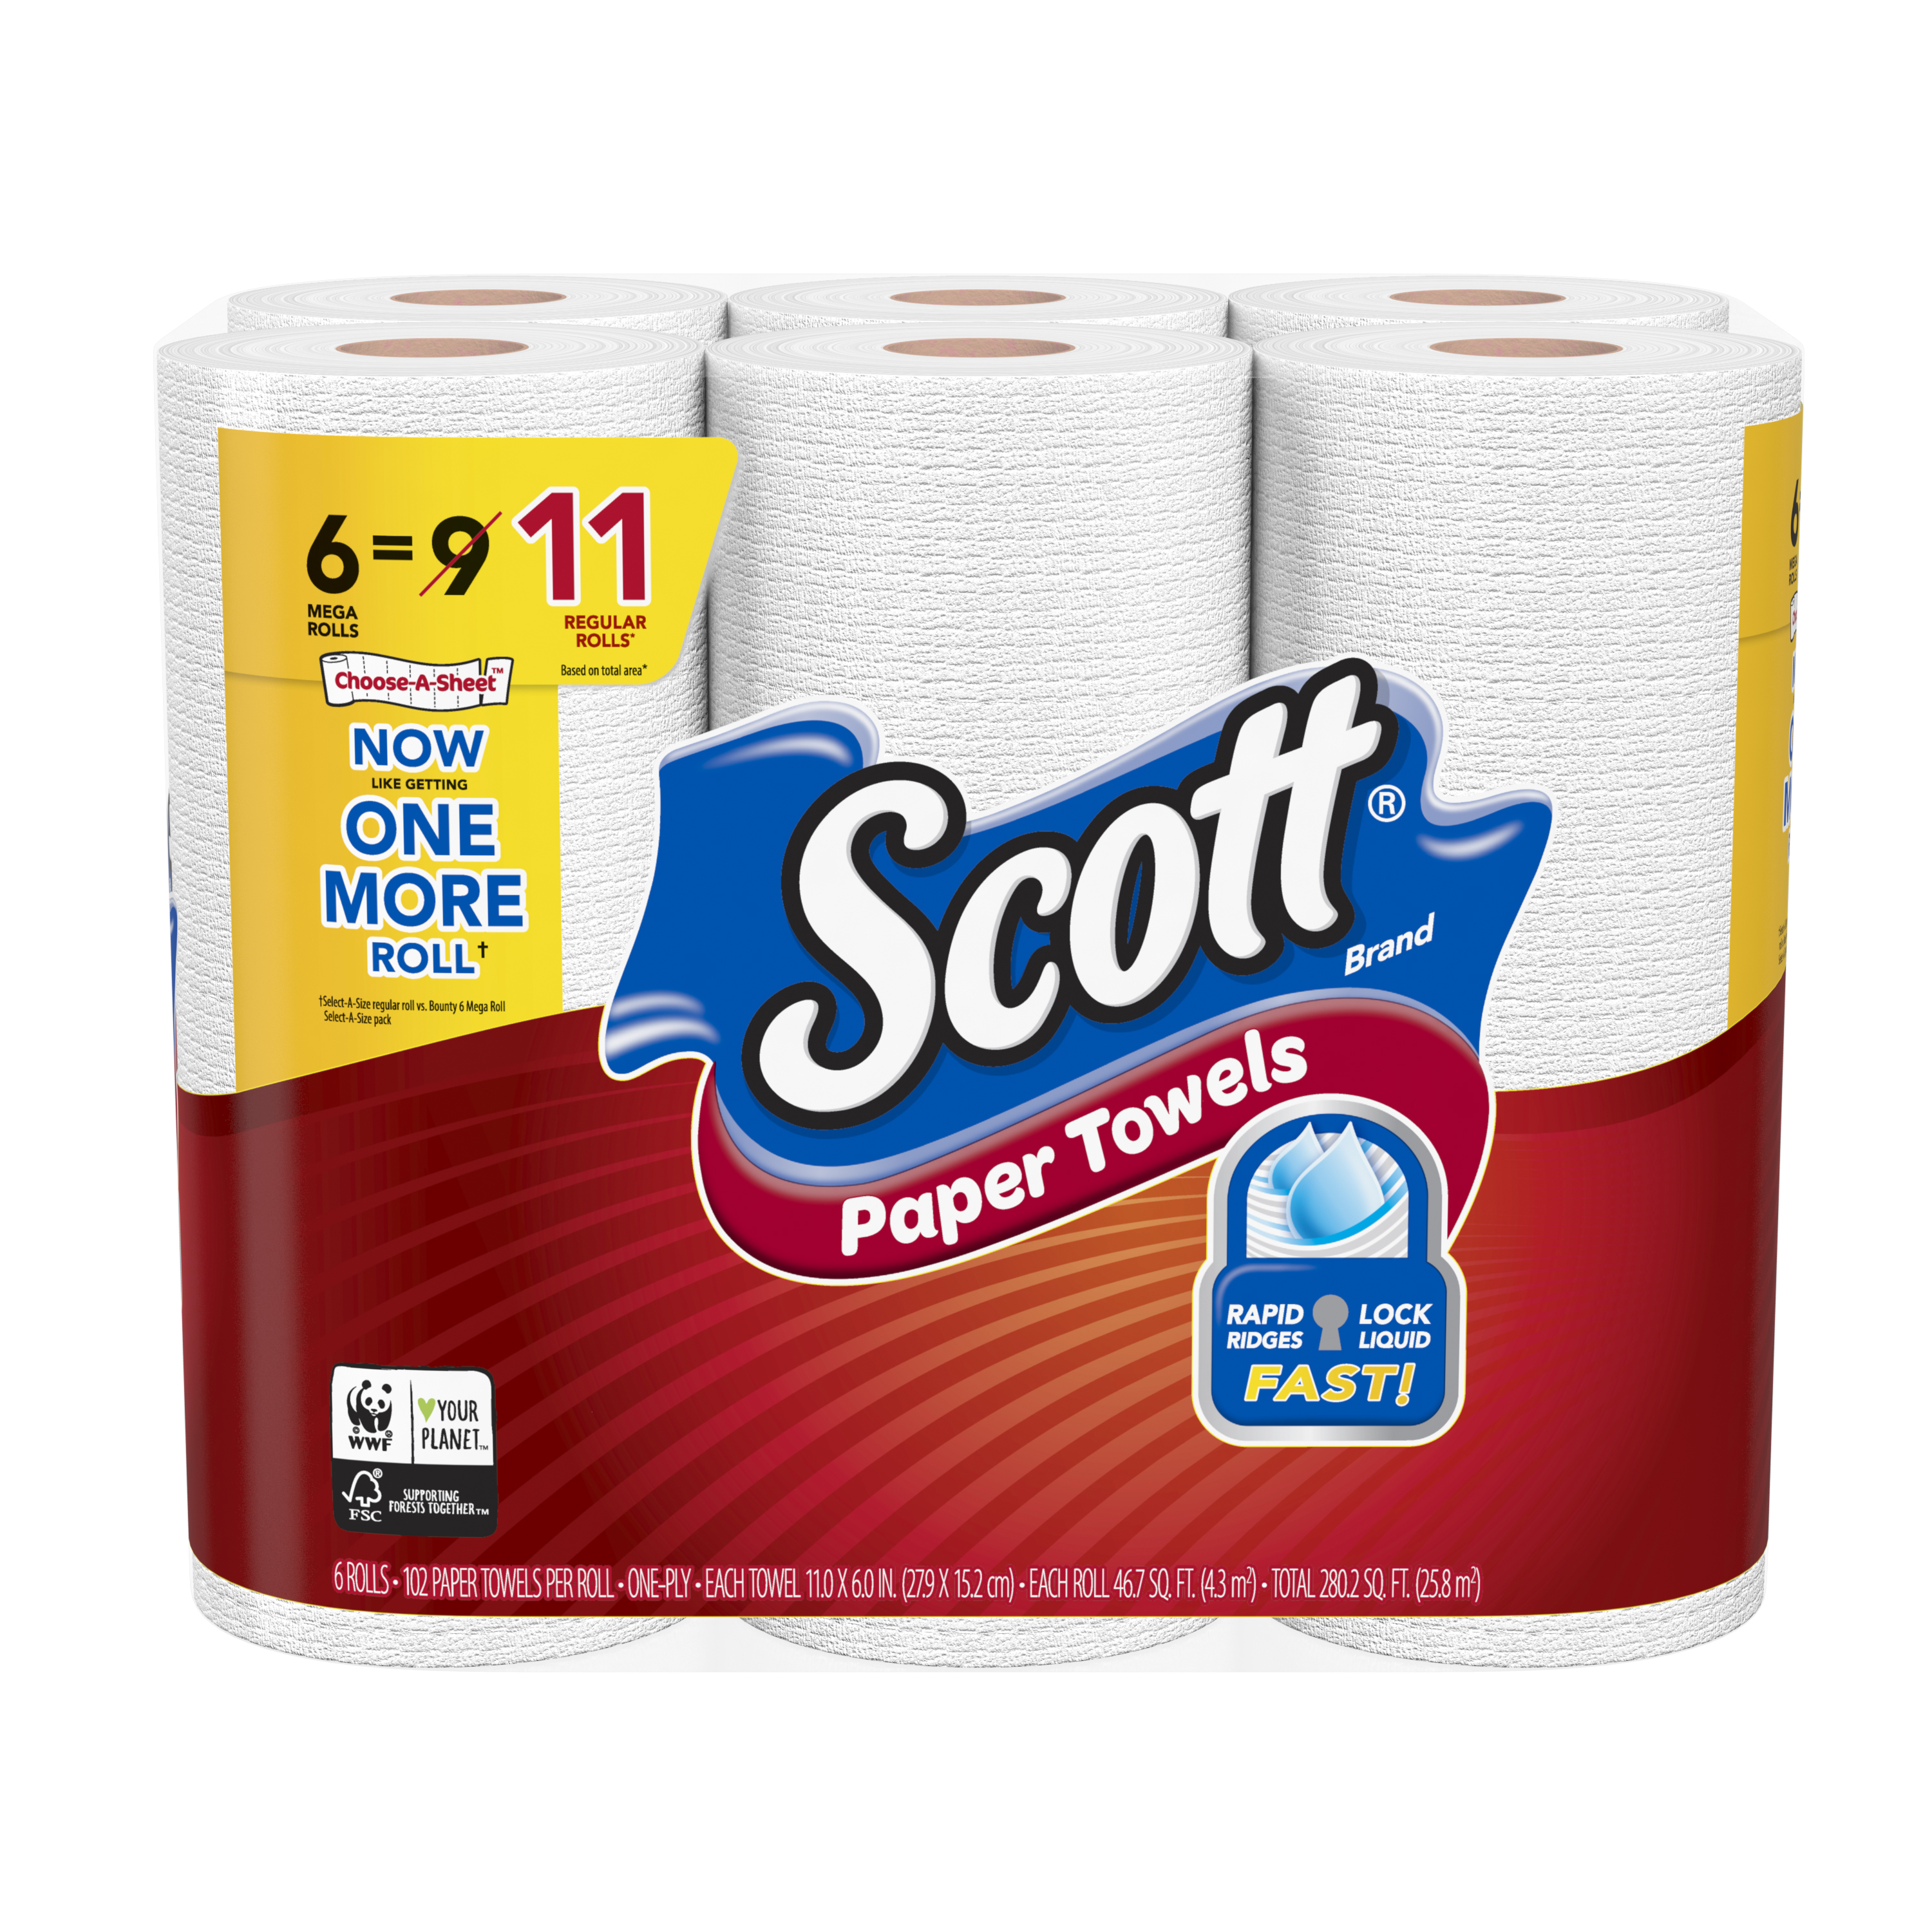 Scott Paper Towels, 6 Mega Rolls (11 Regular Rolls), Choose-A-Sheet - image 1 of 6